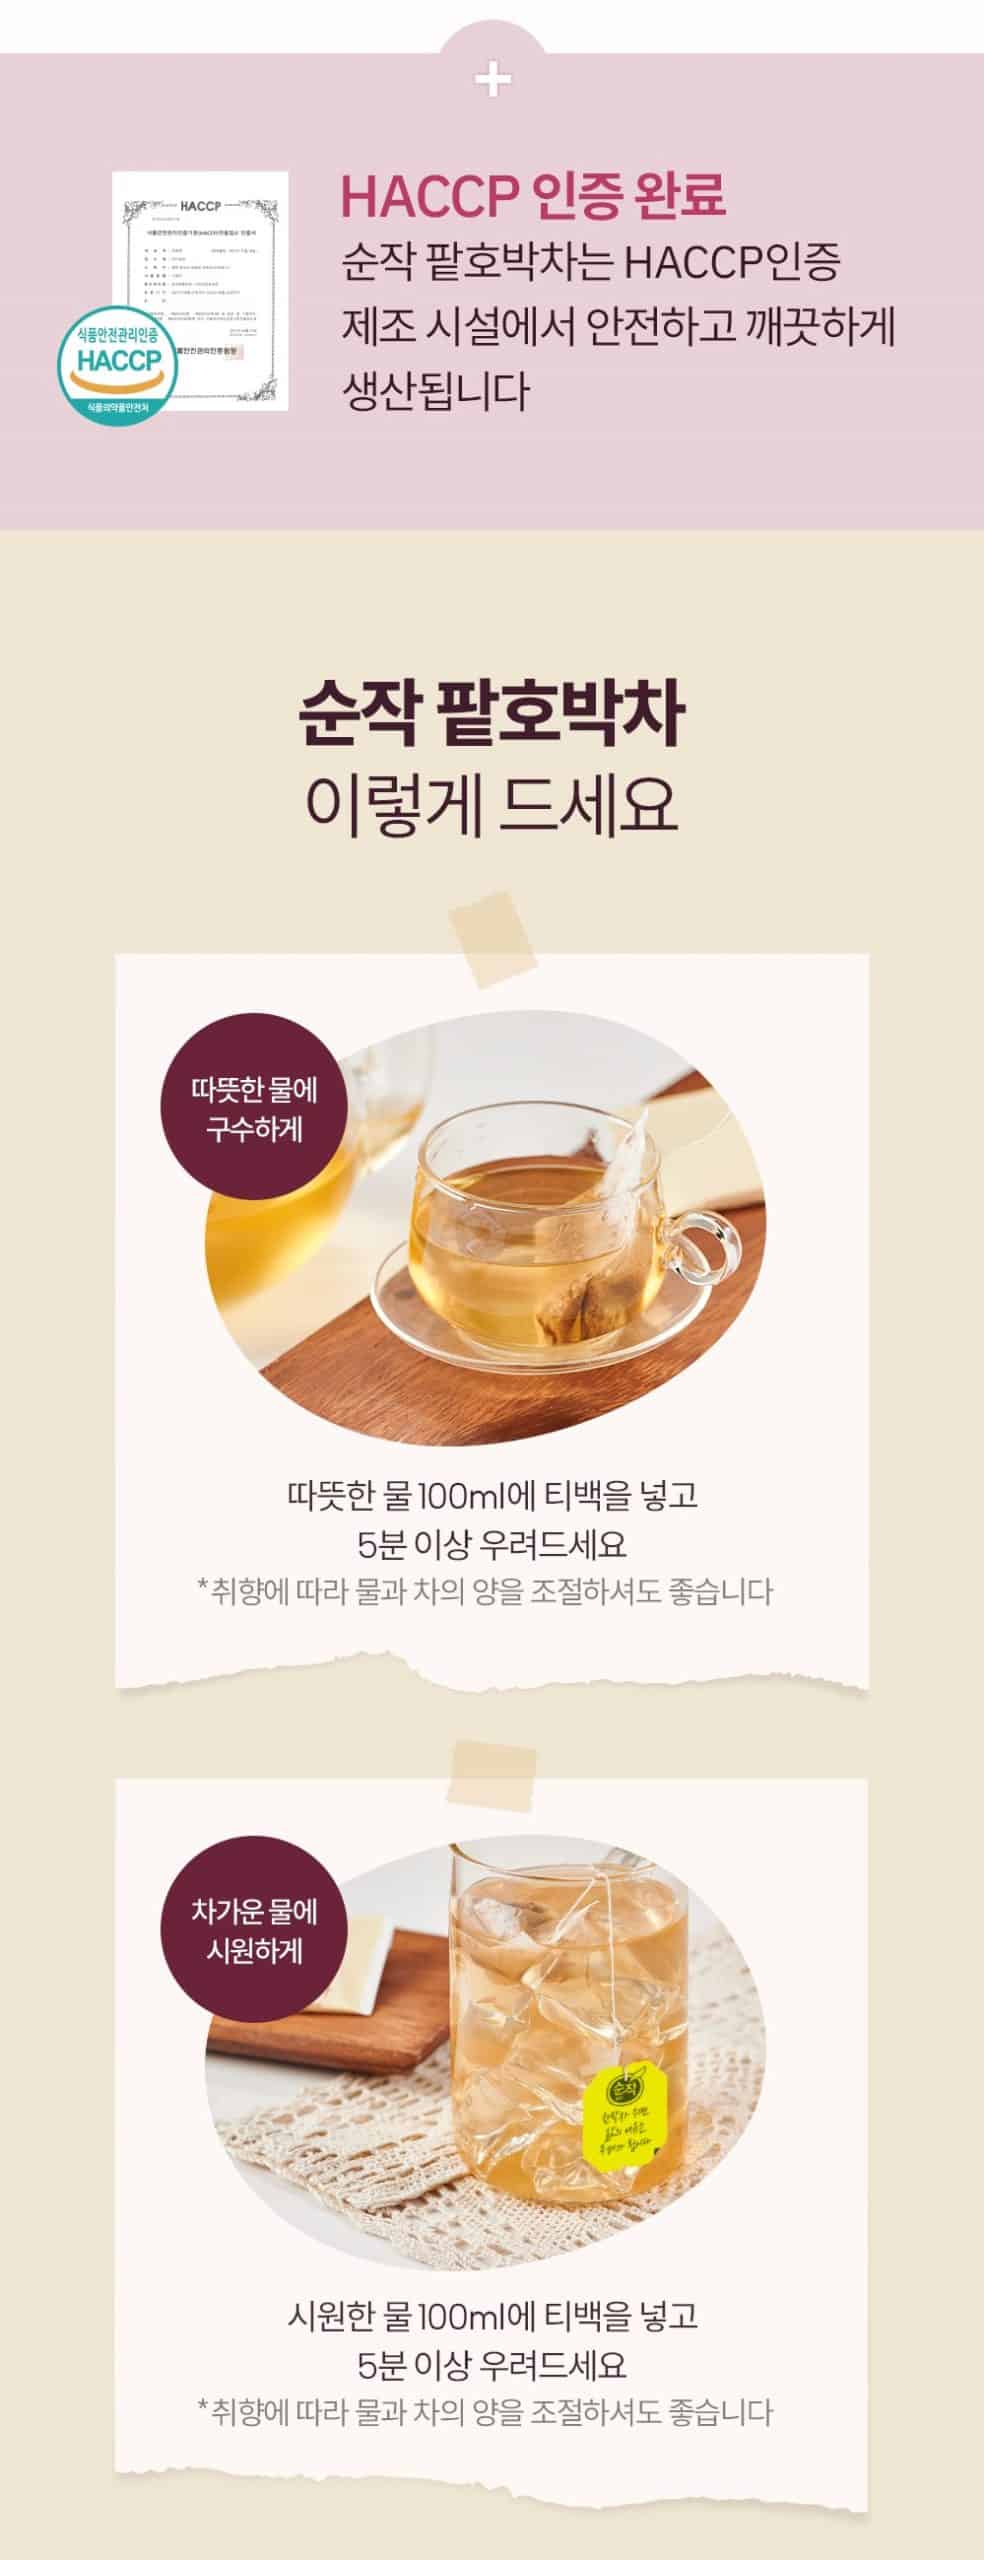 韓國食品-[Sempio] Red Bean&Pumpkin Tea 0.8g*40t